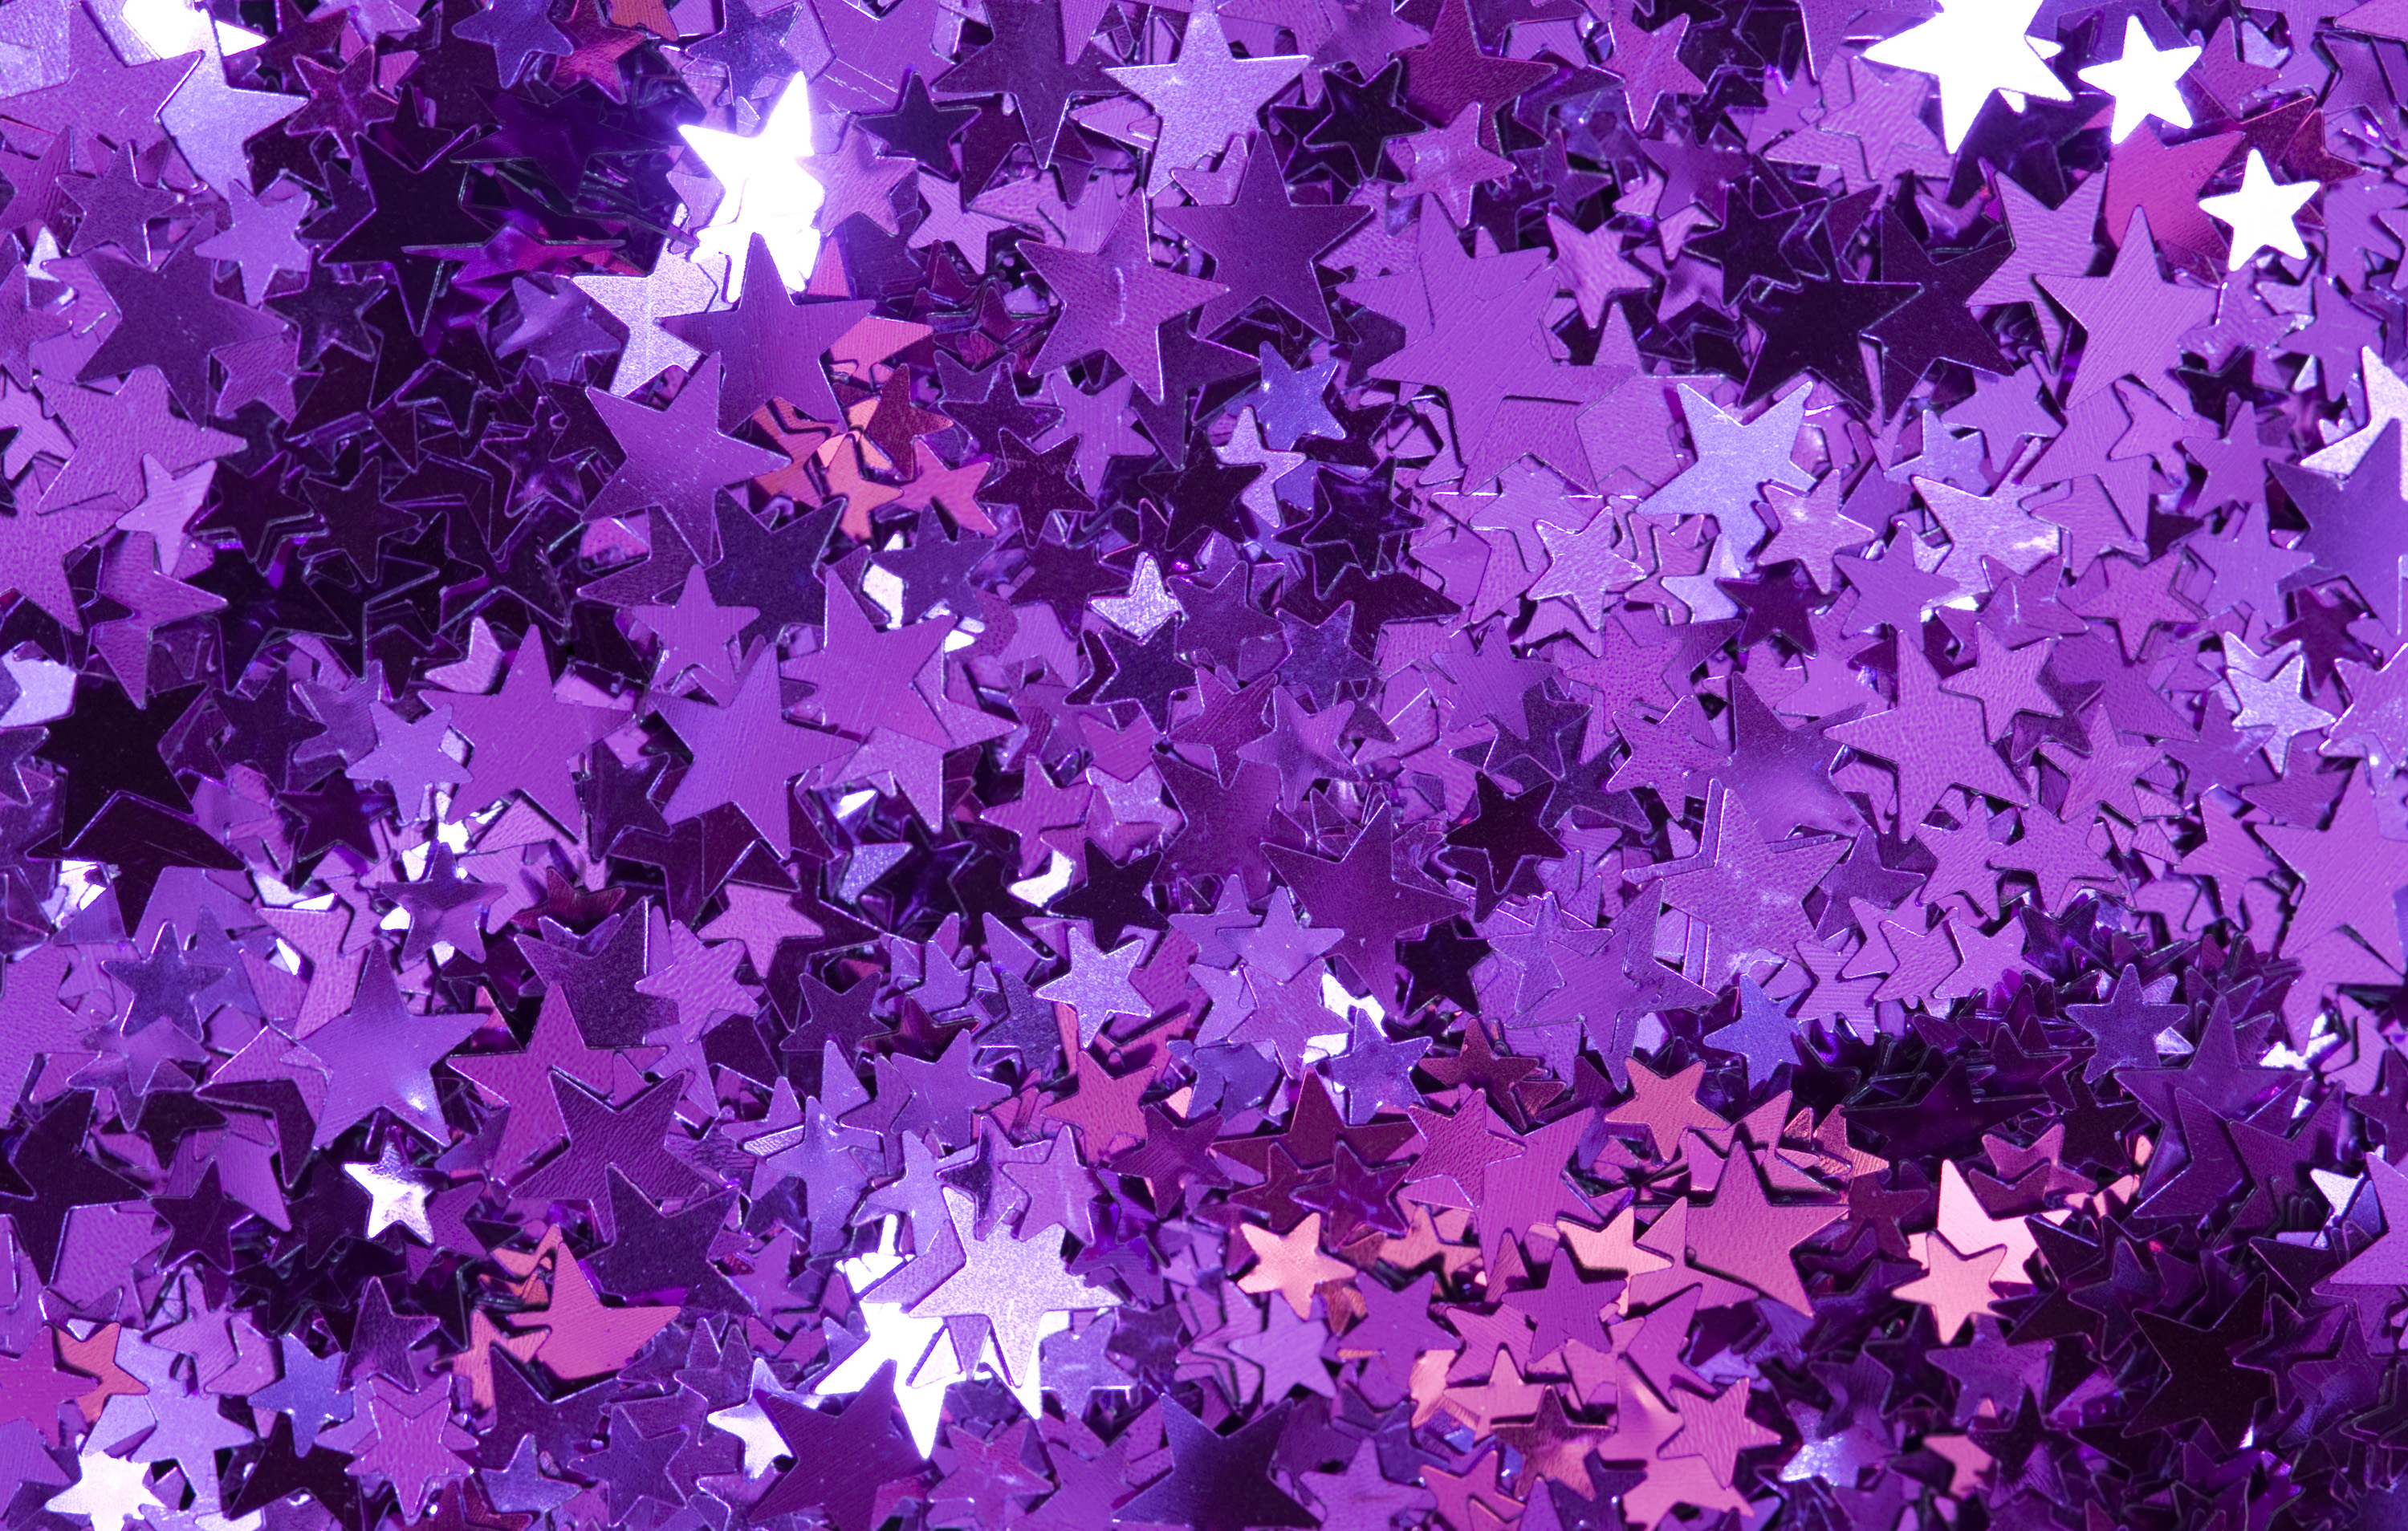 Original Image Of Glitter Star Backdrop 2270kb